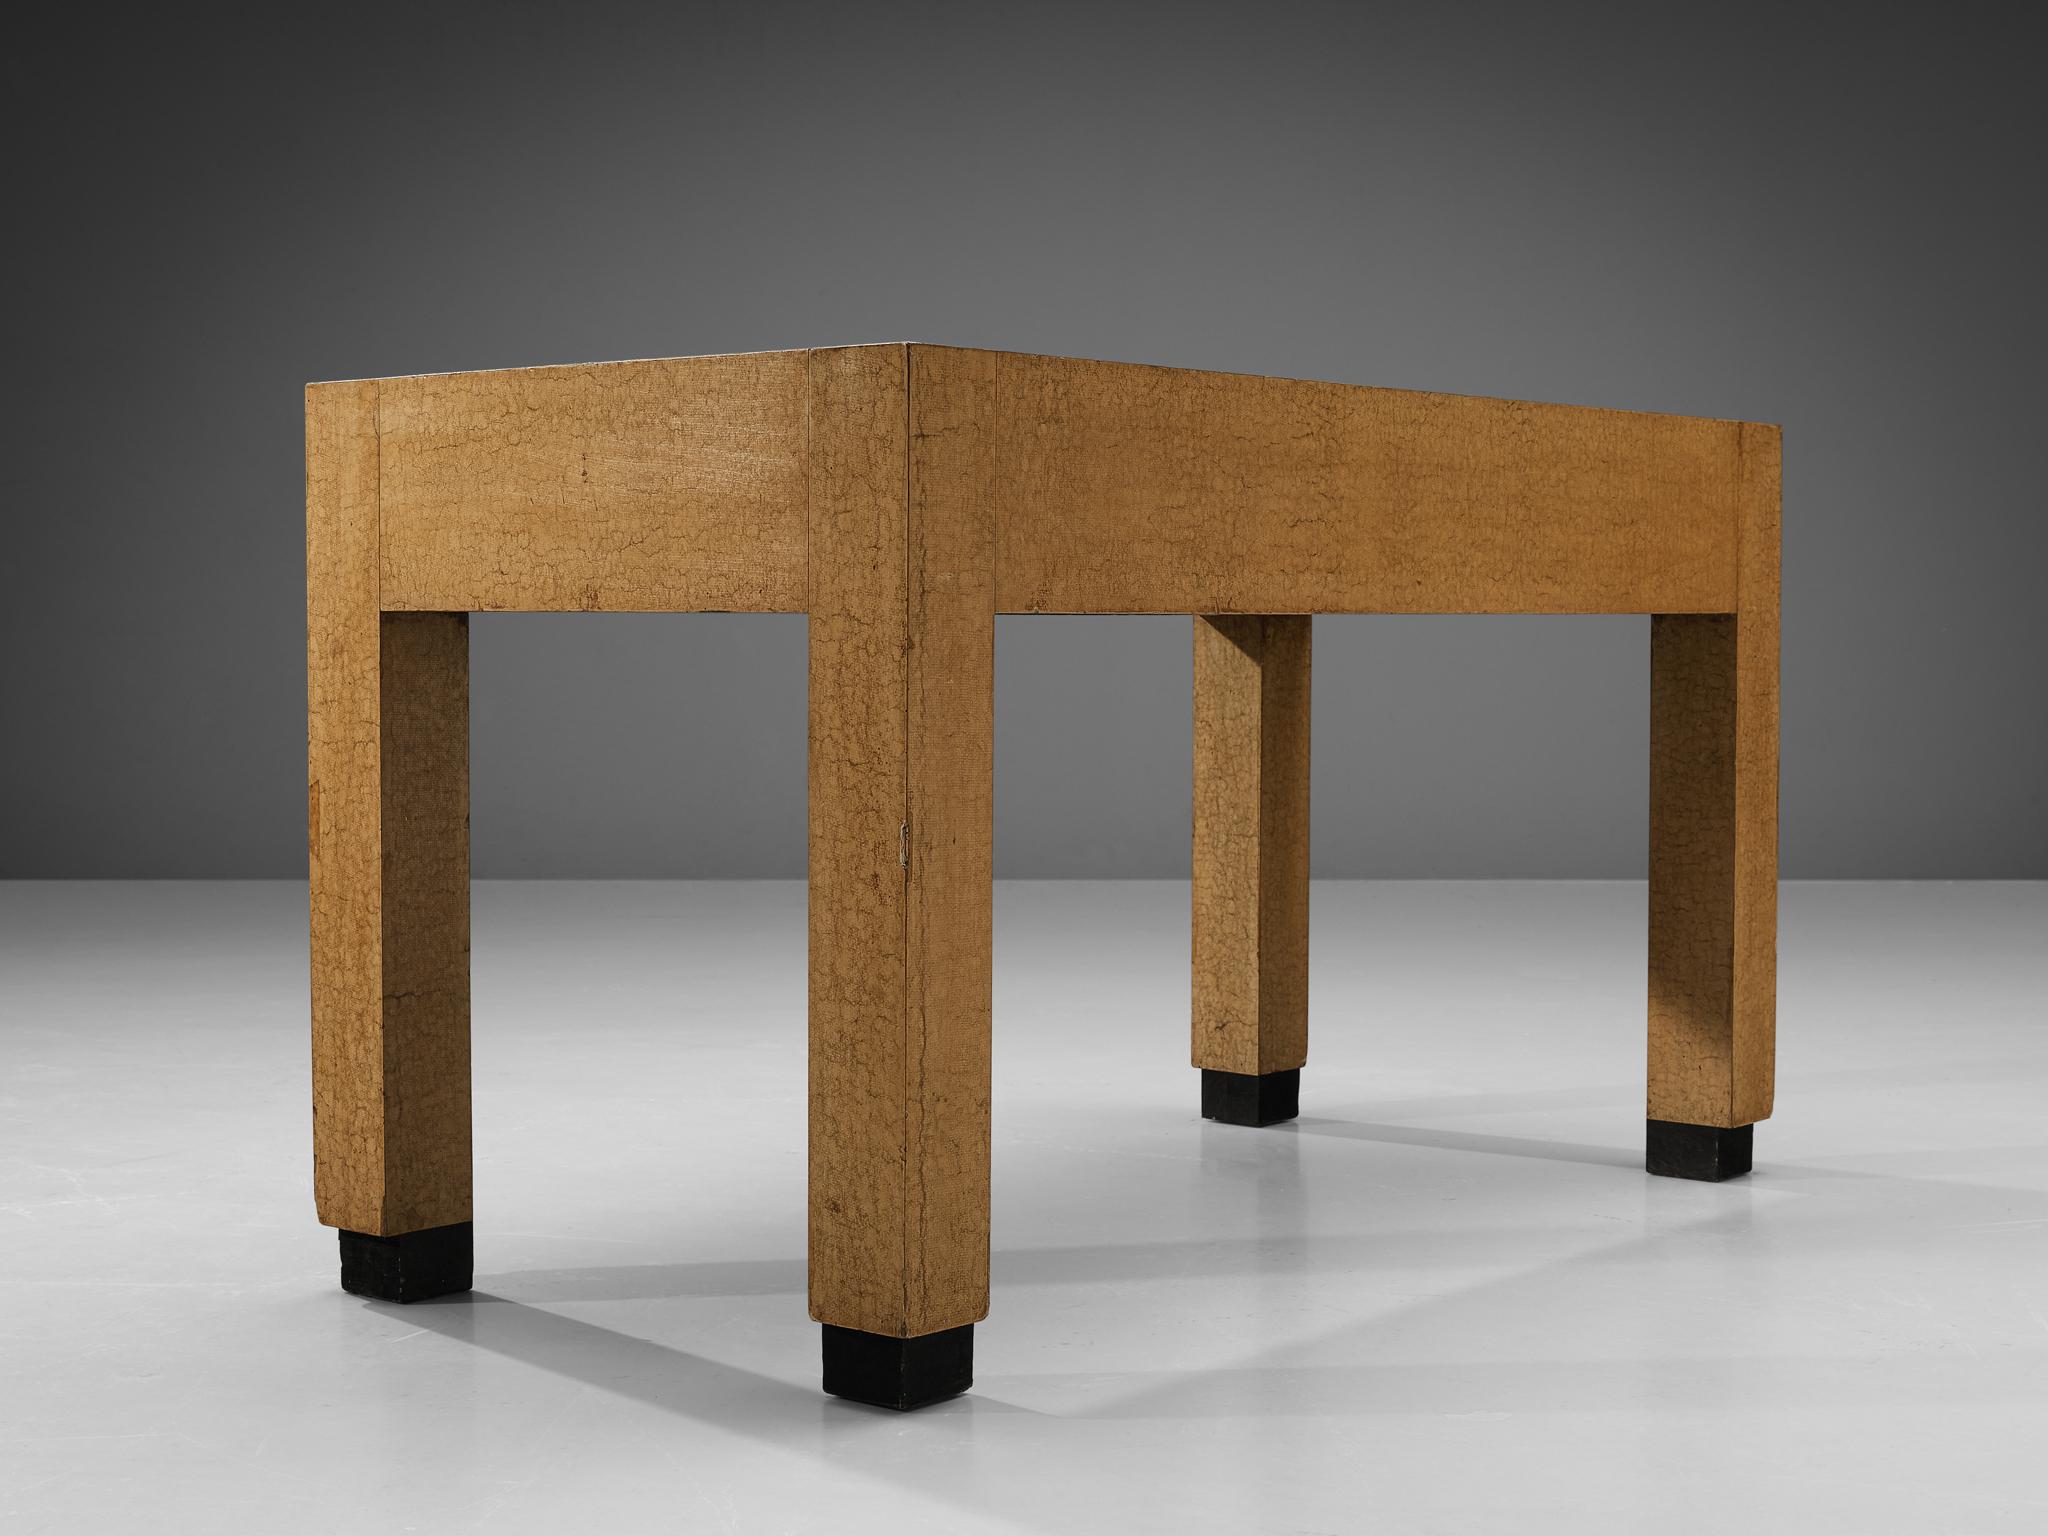 Italian Giuseppe Pagano-Pogatschnig and Gino Levi Montalcini Desk in Wood and Buxus 